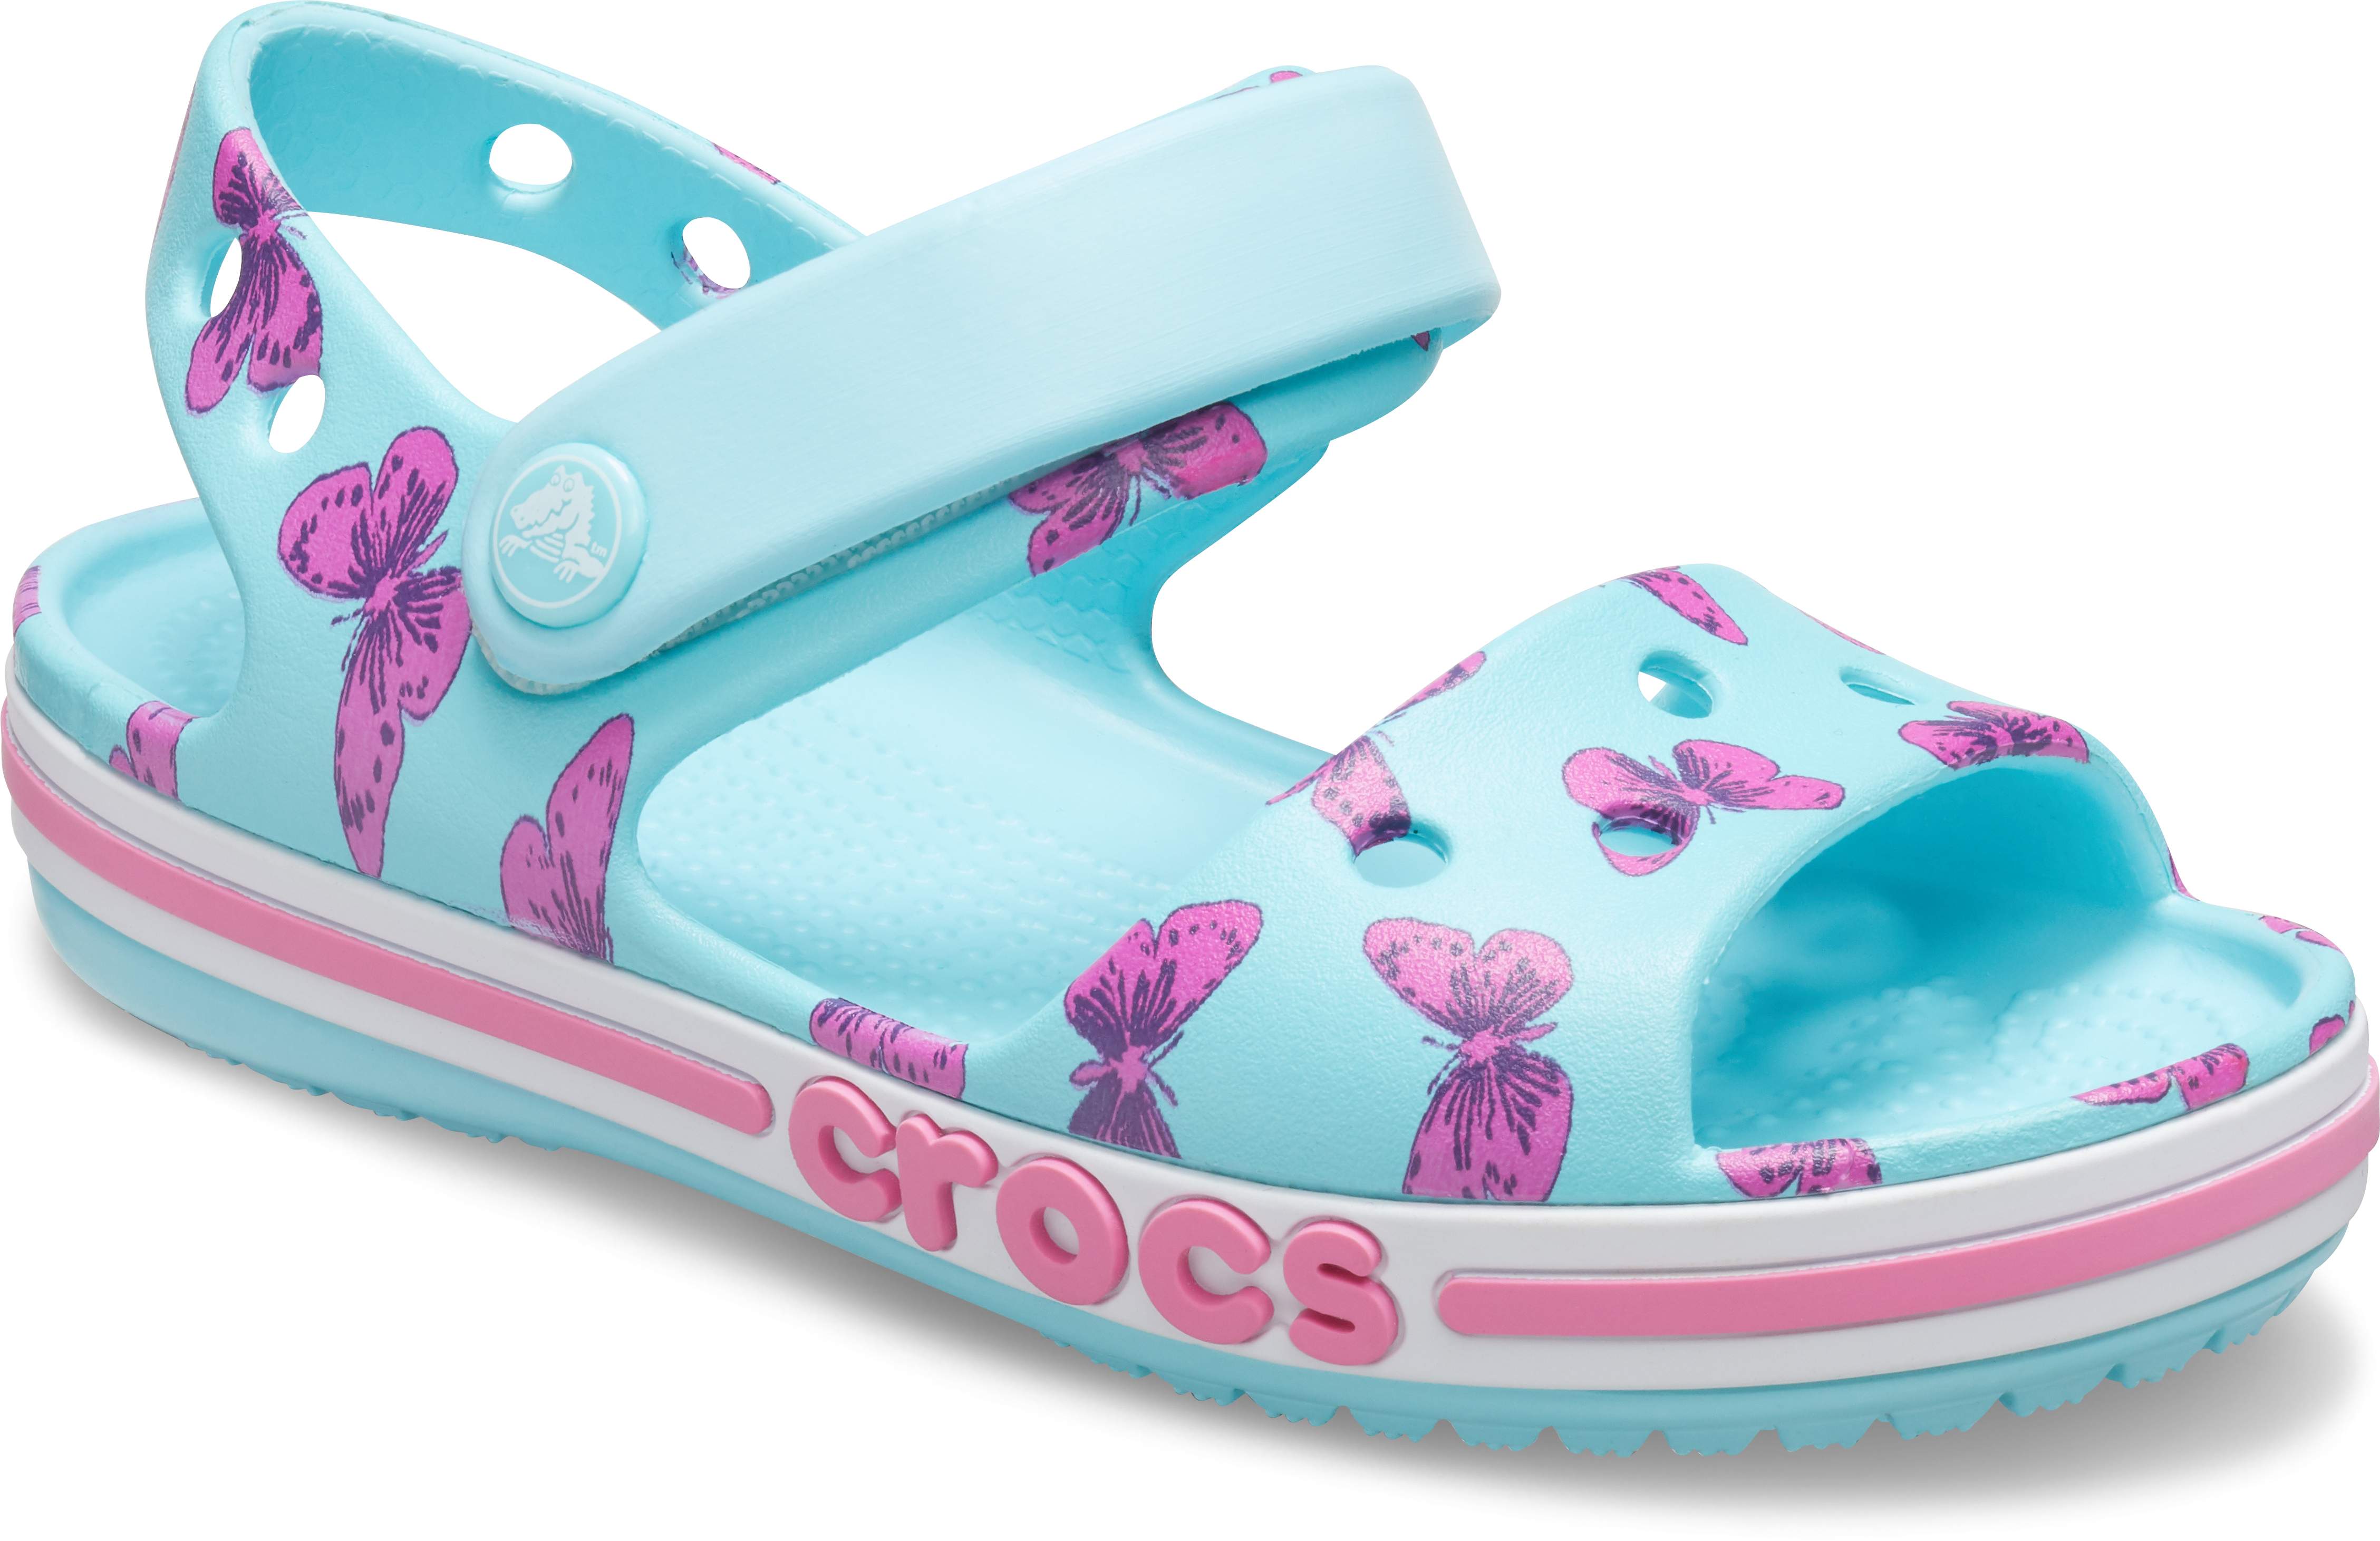 crocs sandals for kids